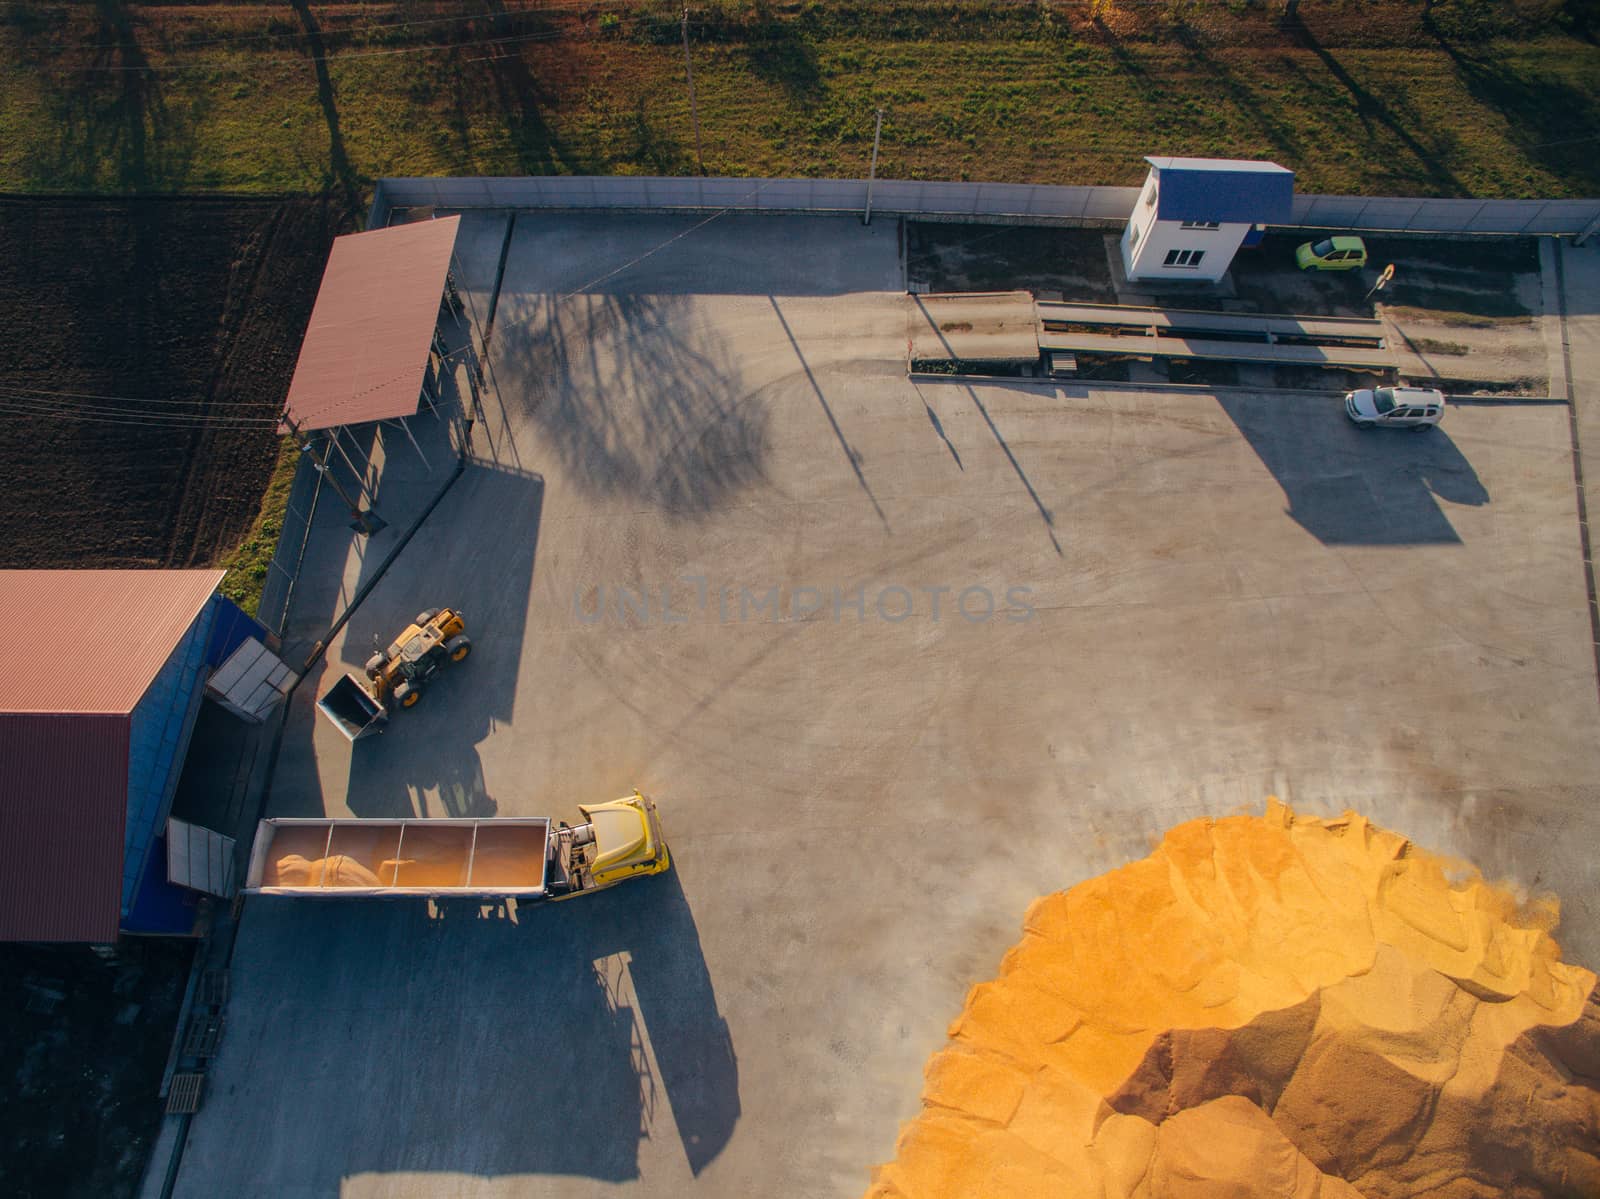 Truck Unloads Corn Grain. Aerial View Over The Grain Warehouse.